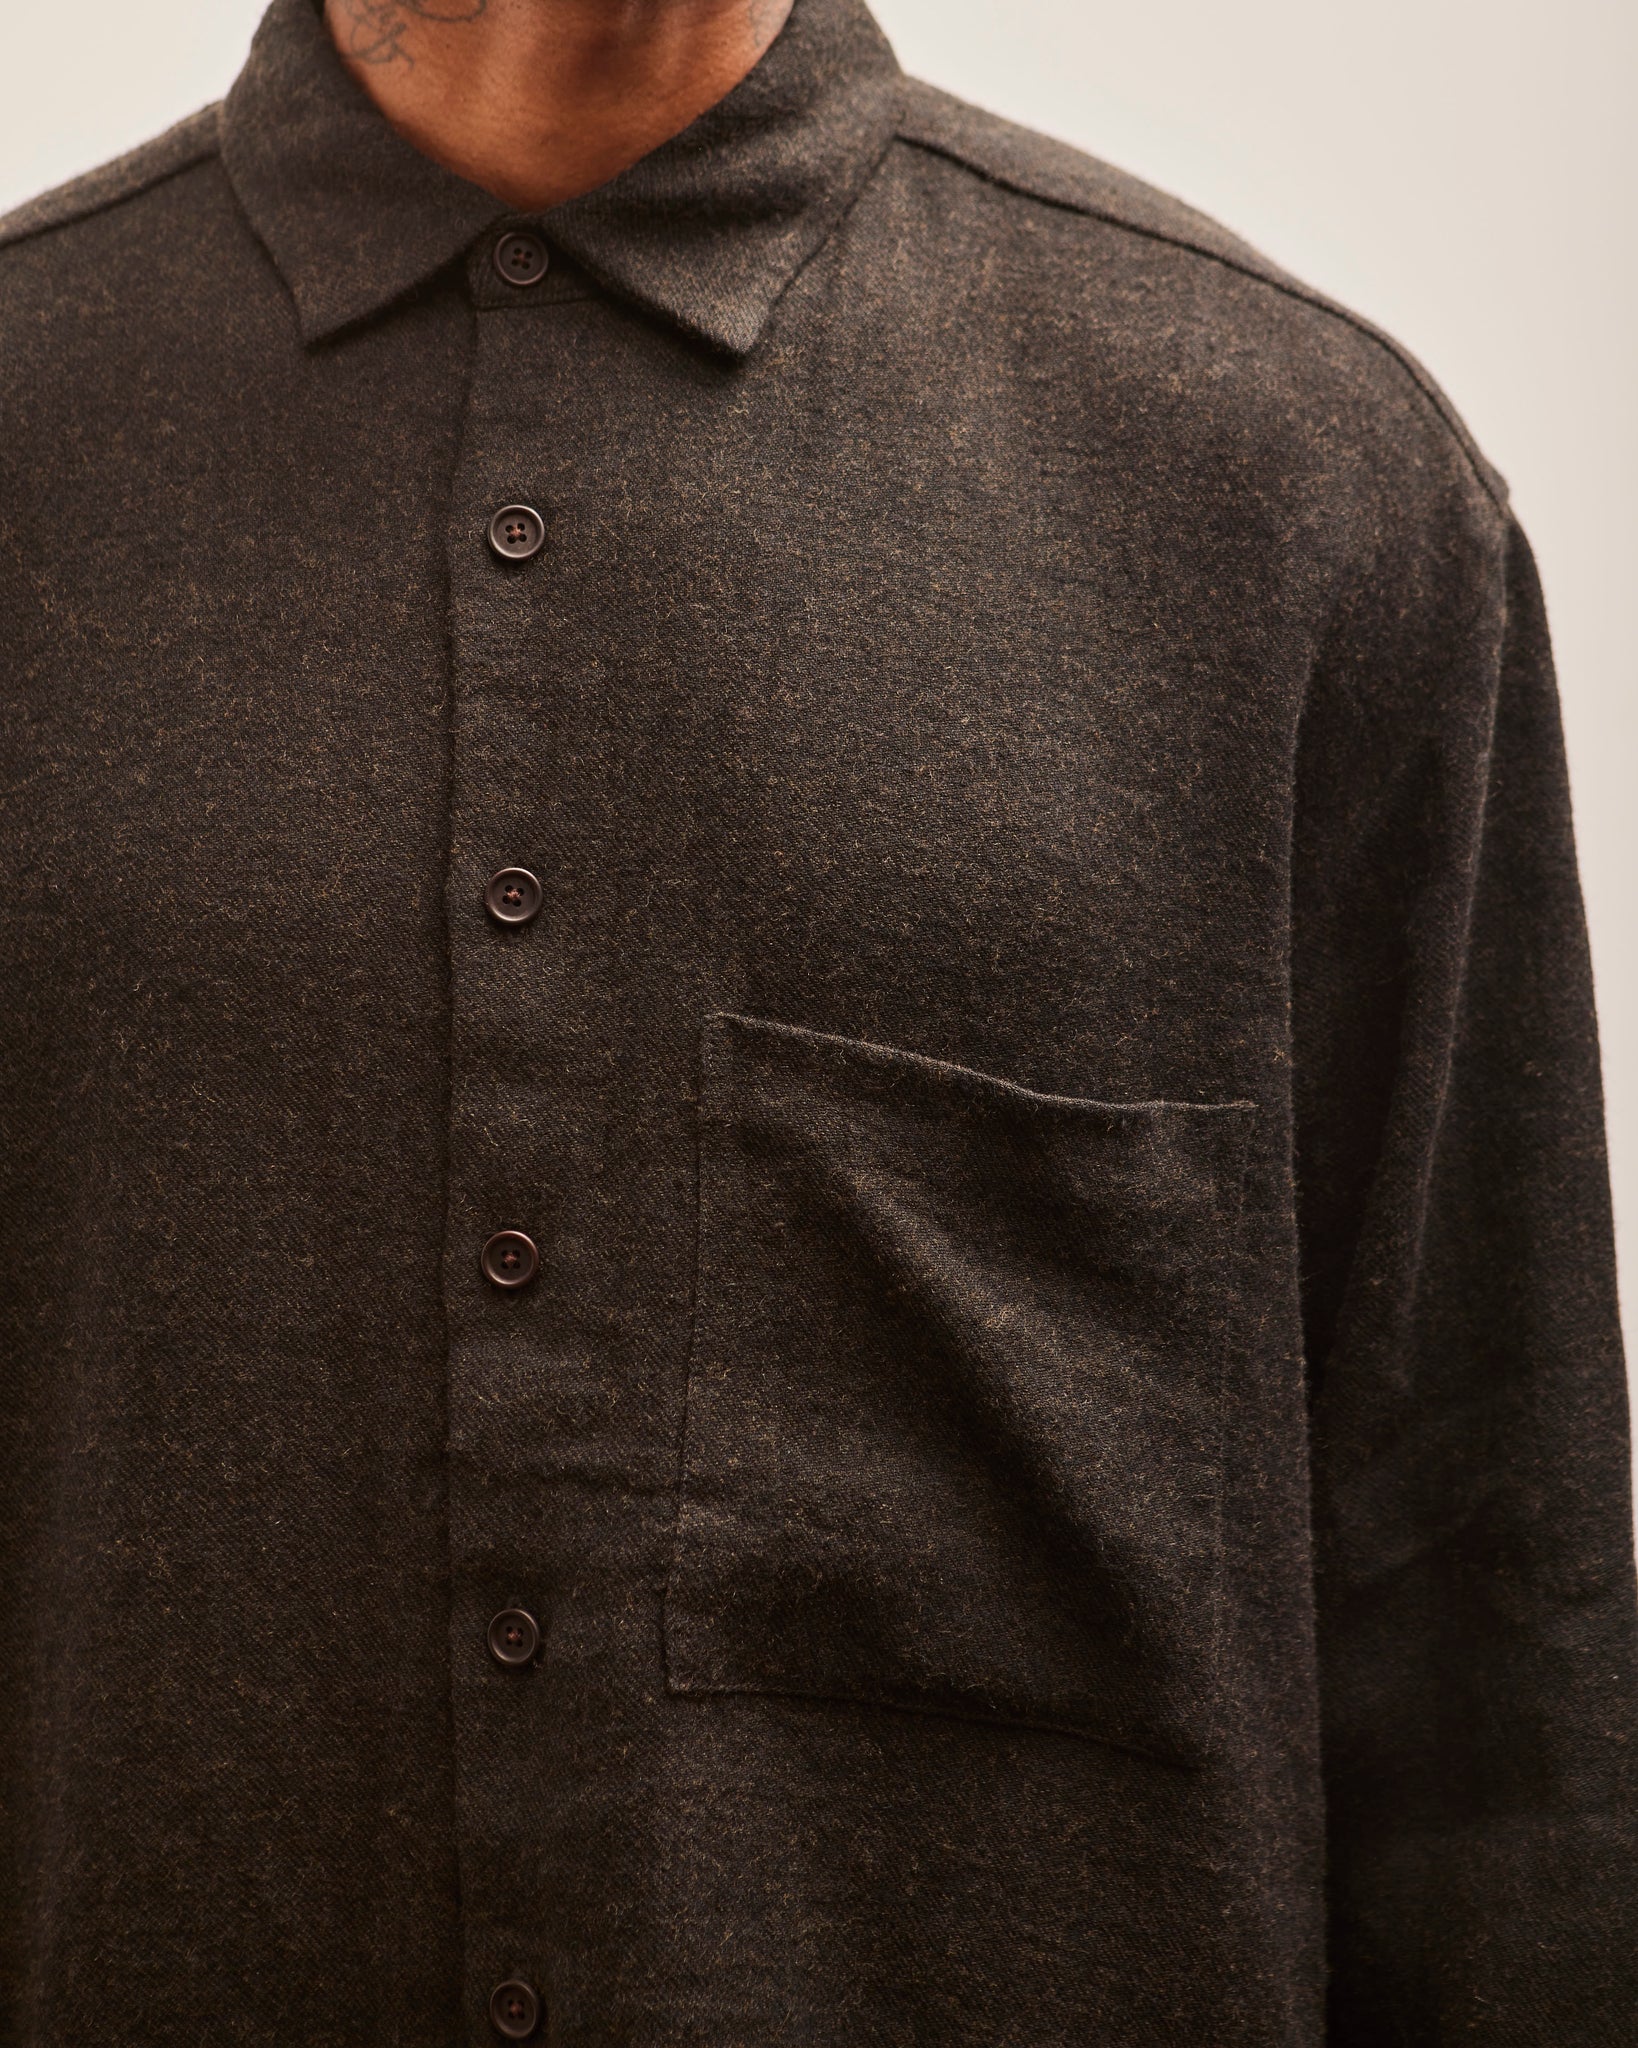 Evan Kinori Big Shirt Two, Brown Brushed Linen/Wool Twill